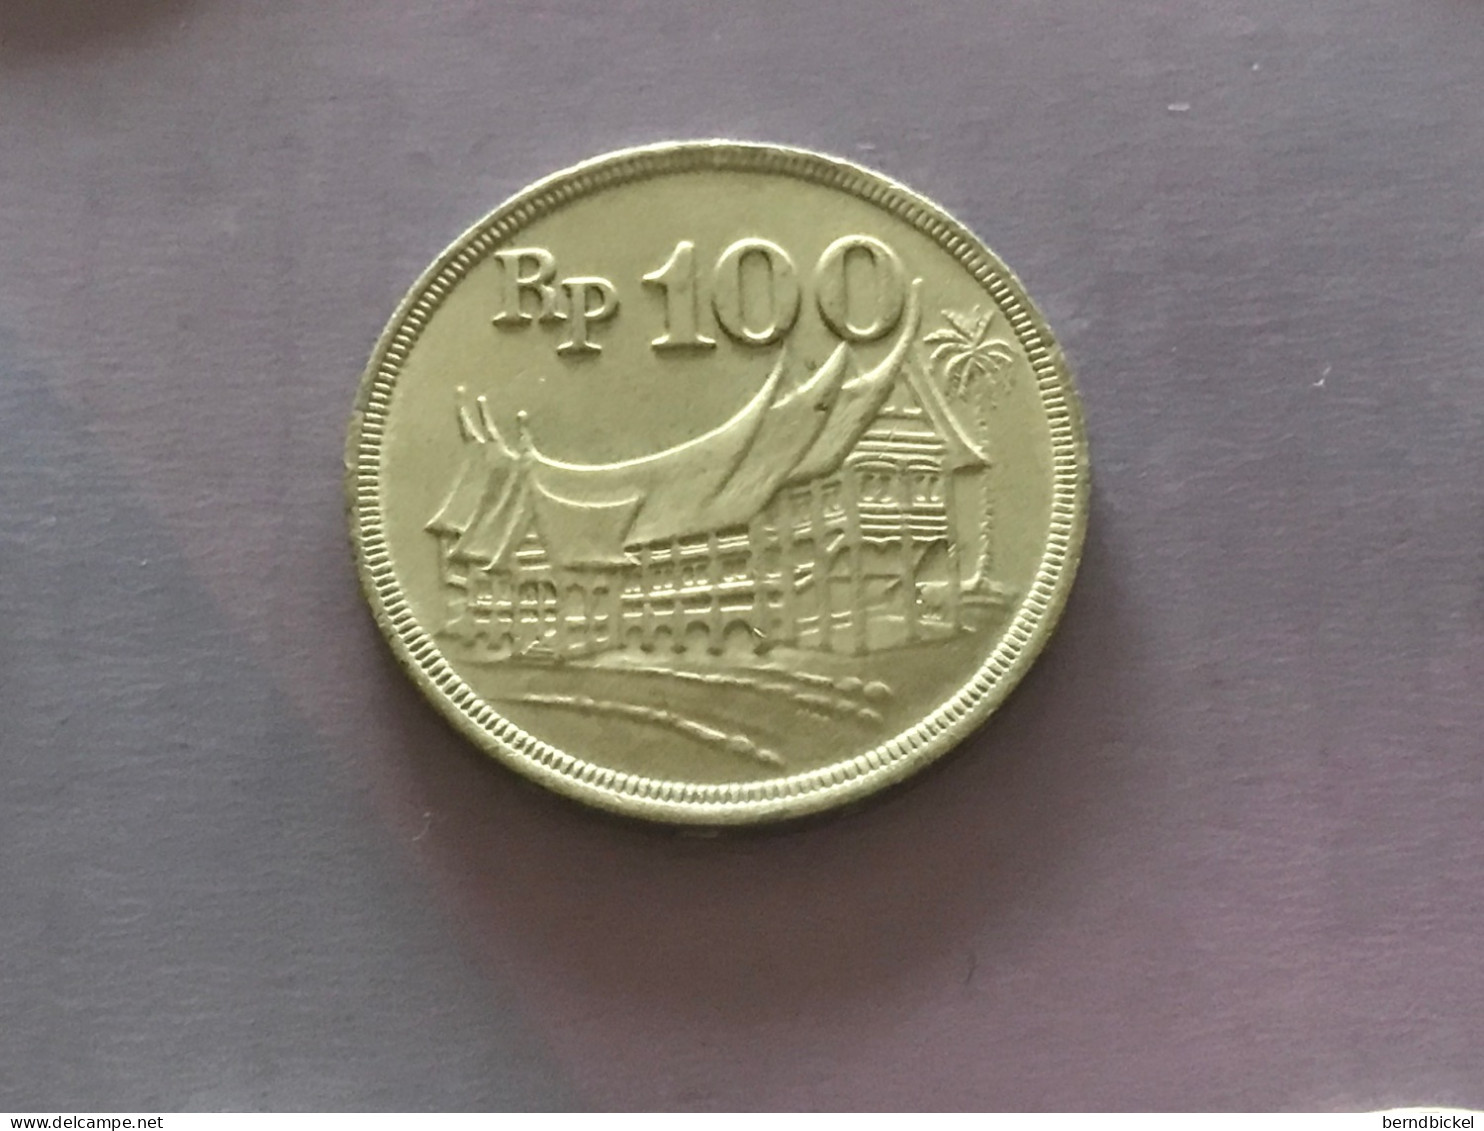 Münze Münzen Umlaufmünze Indonesien 100 Rupien 1973 - Indonesien